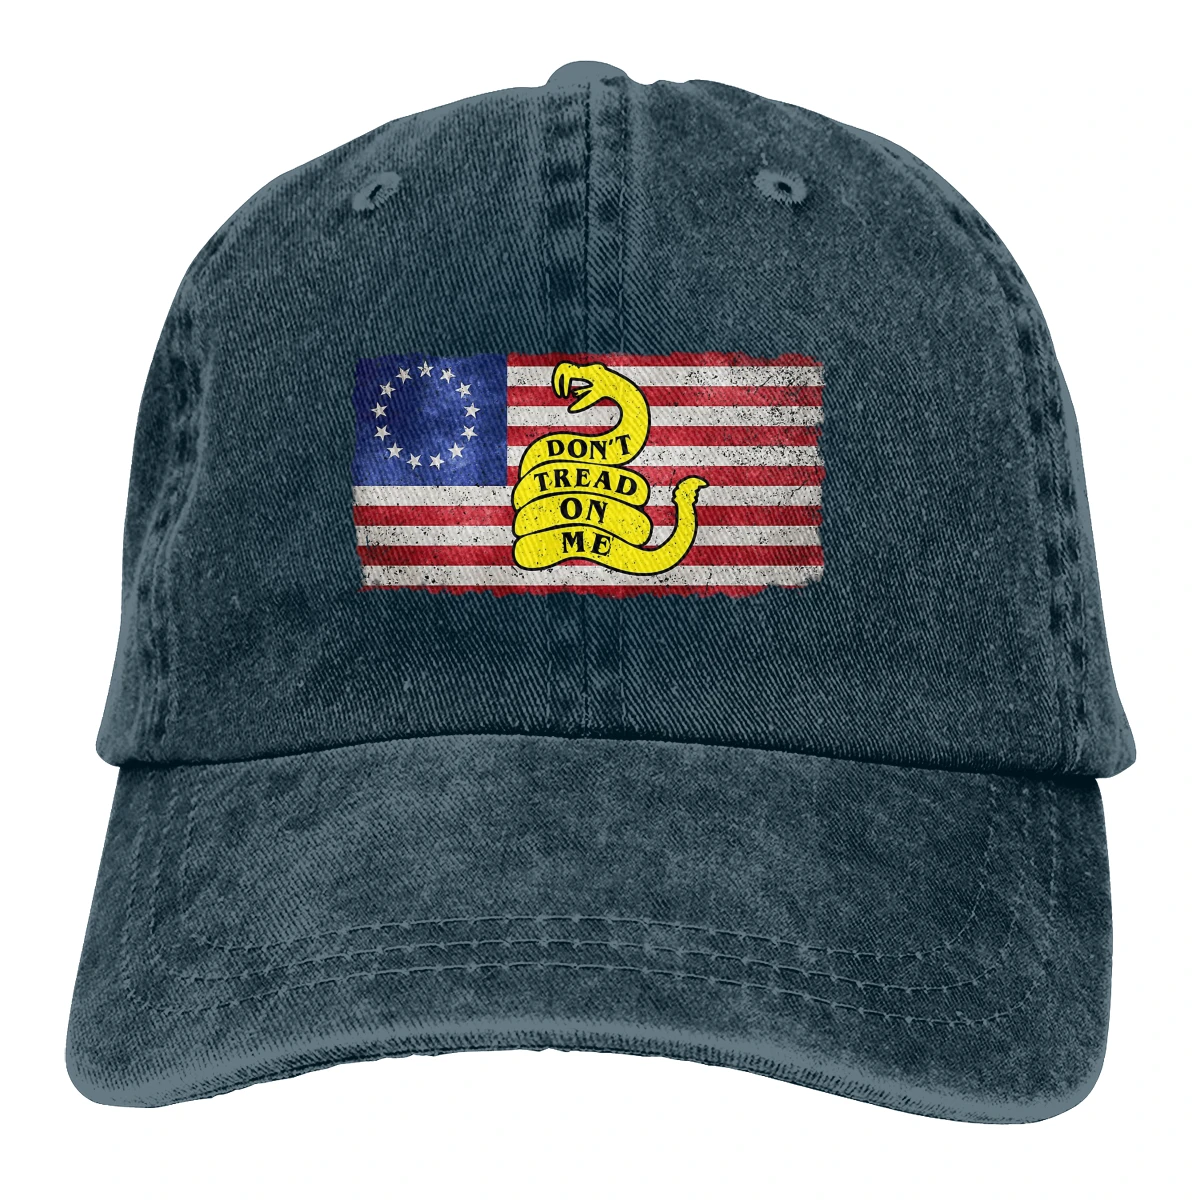 

American The Baseball Cap Peaked capt Sport Unisex Outdoor Custom Don't Tread On Me USA Hats